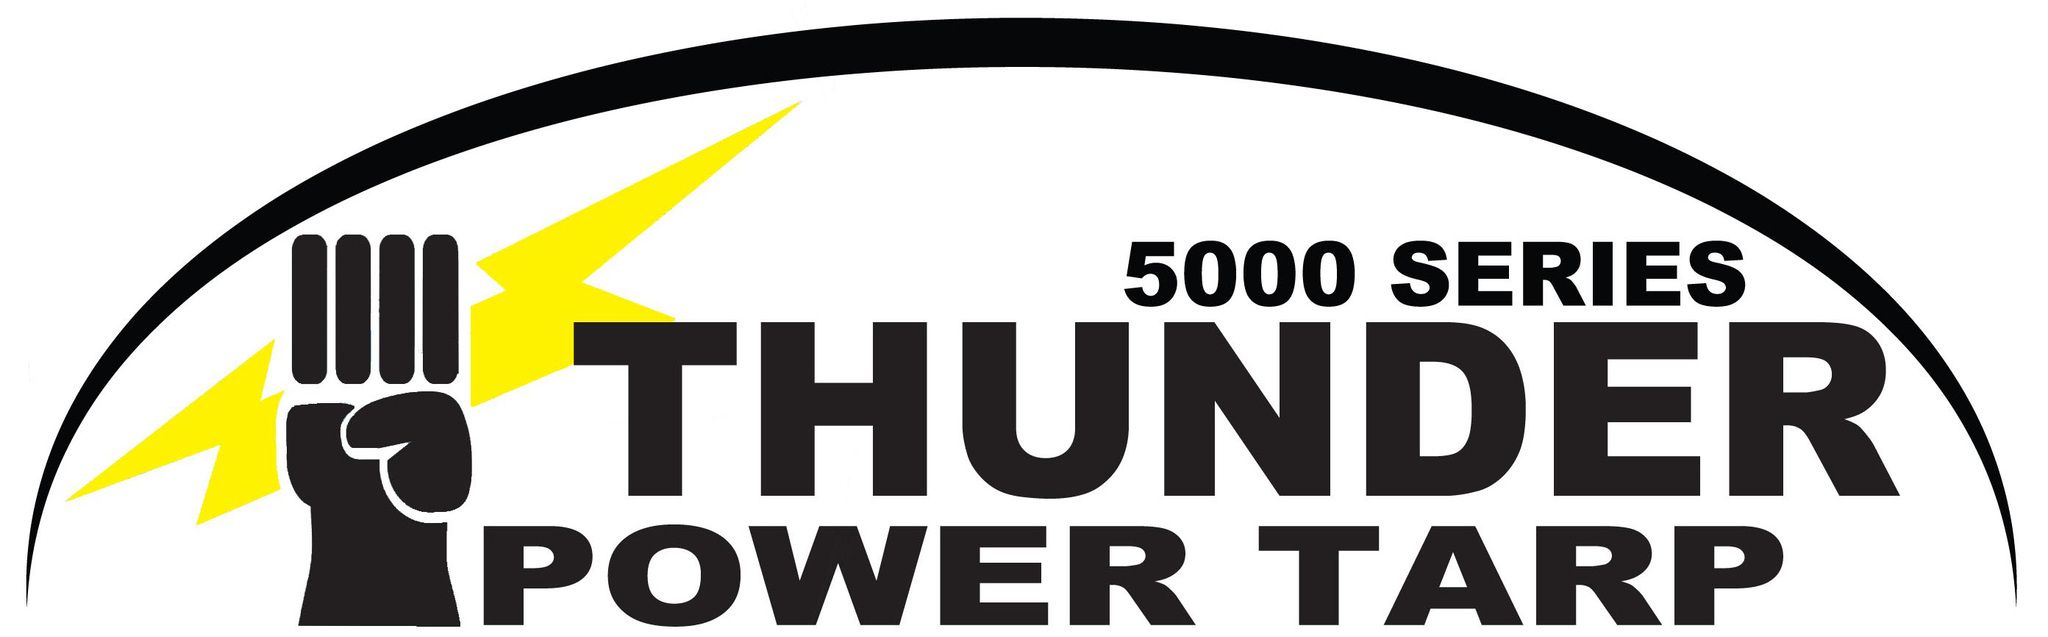 Thunder Power Tarp 5000 Series Logo